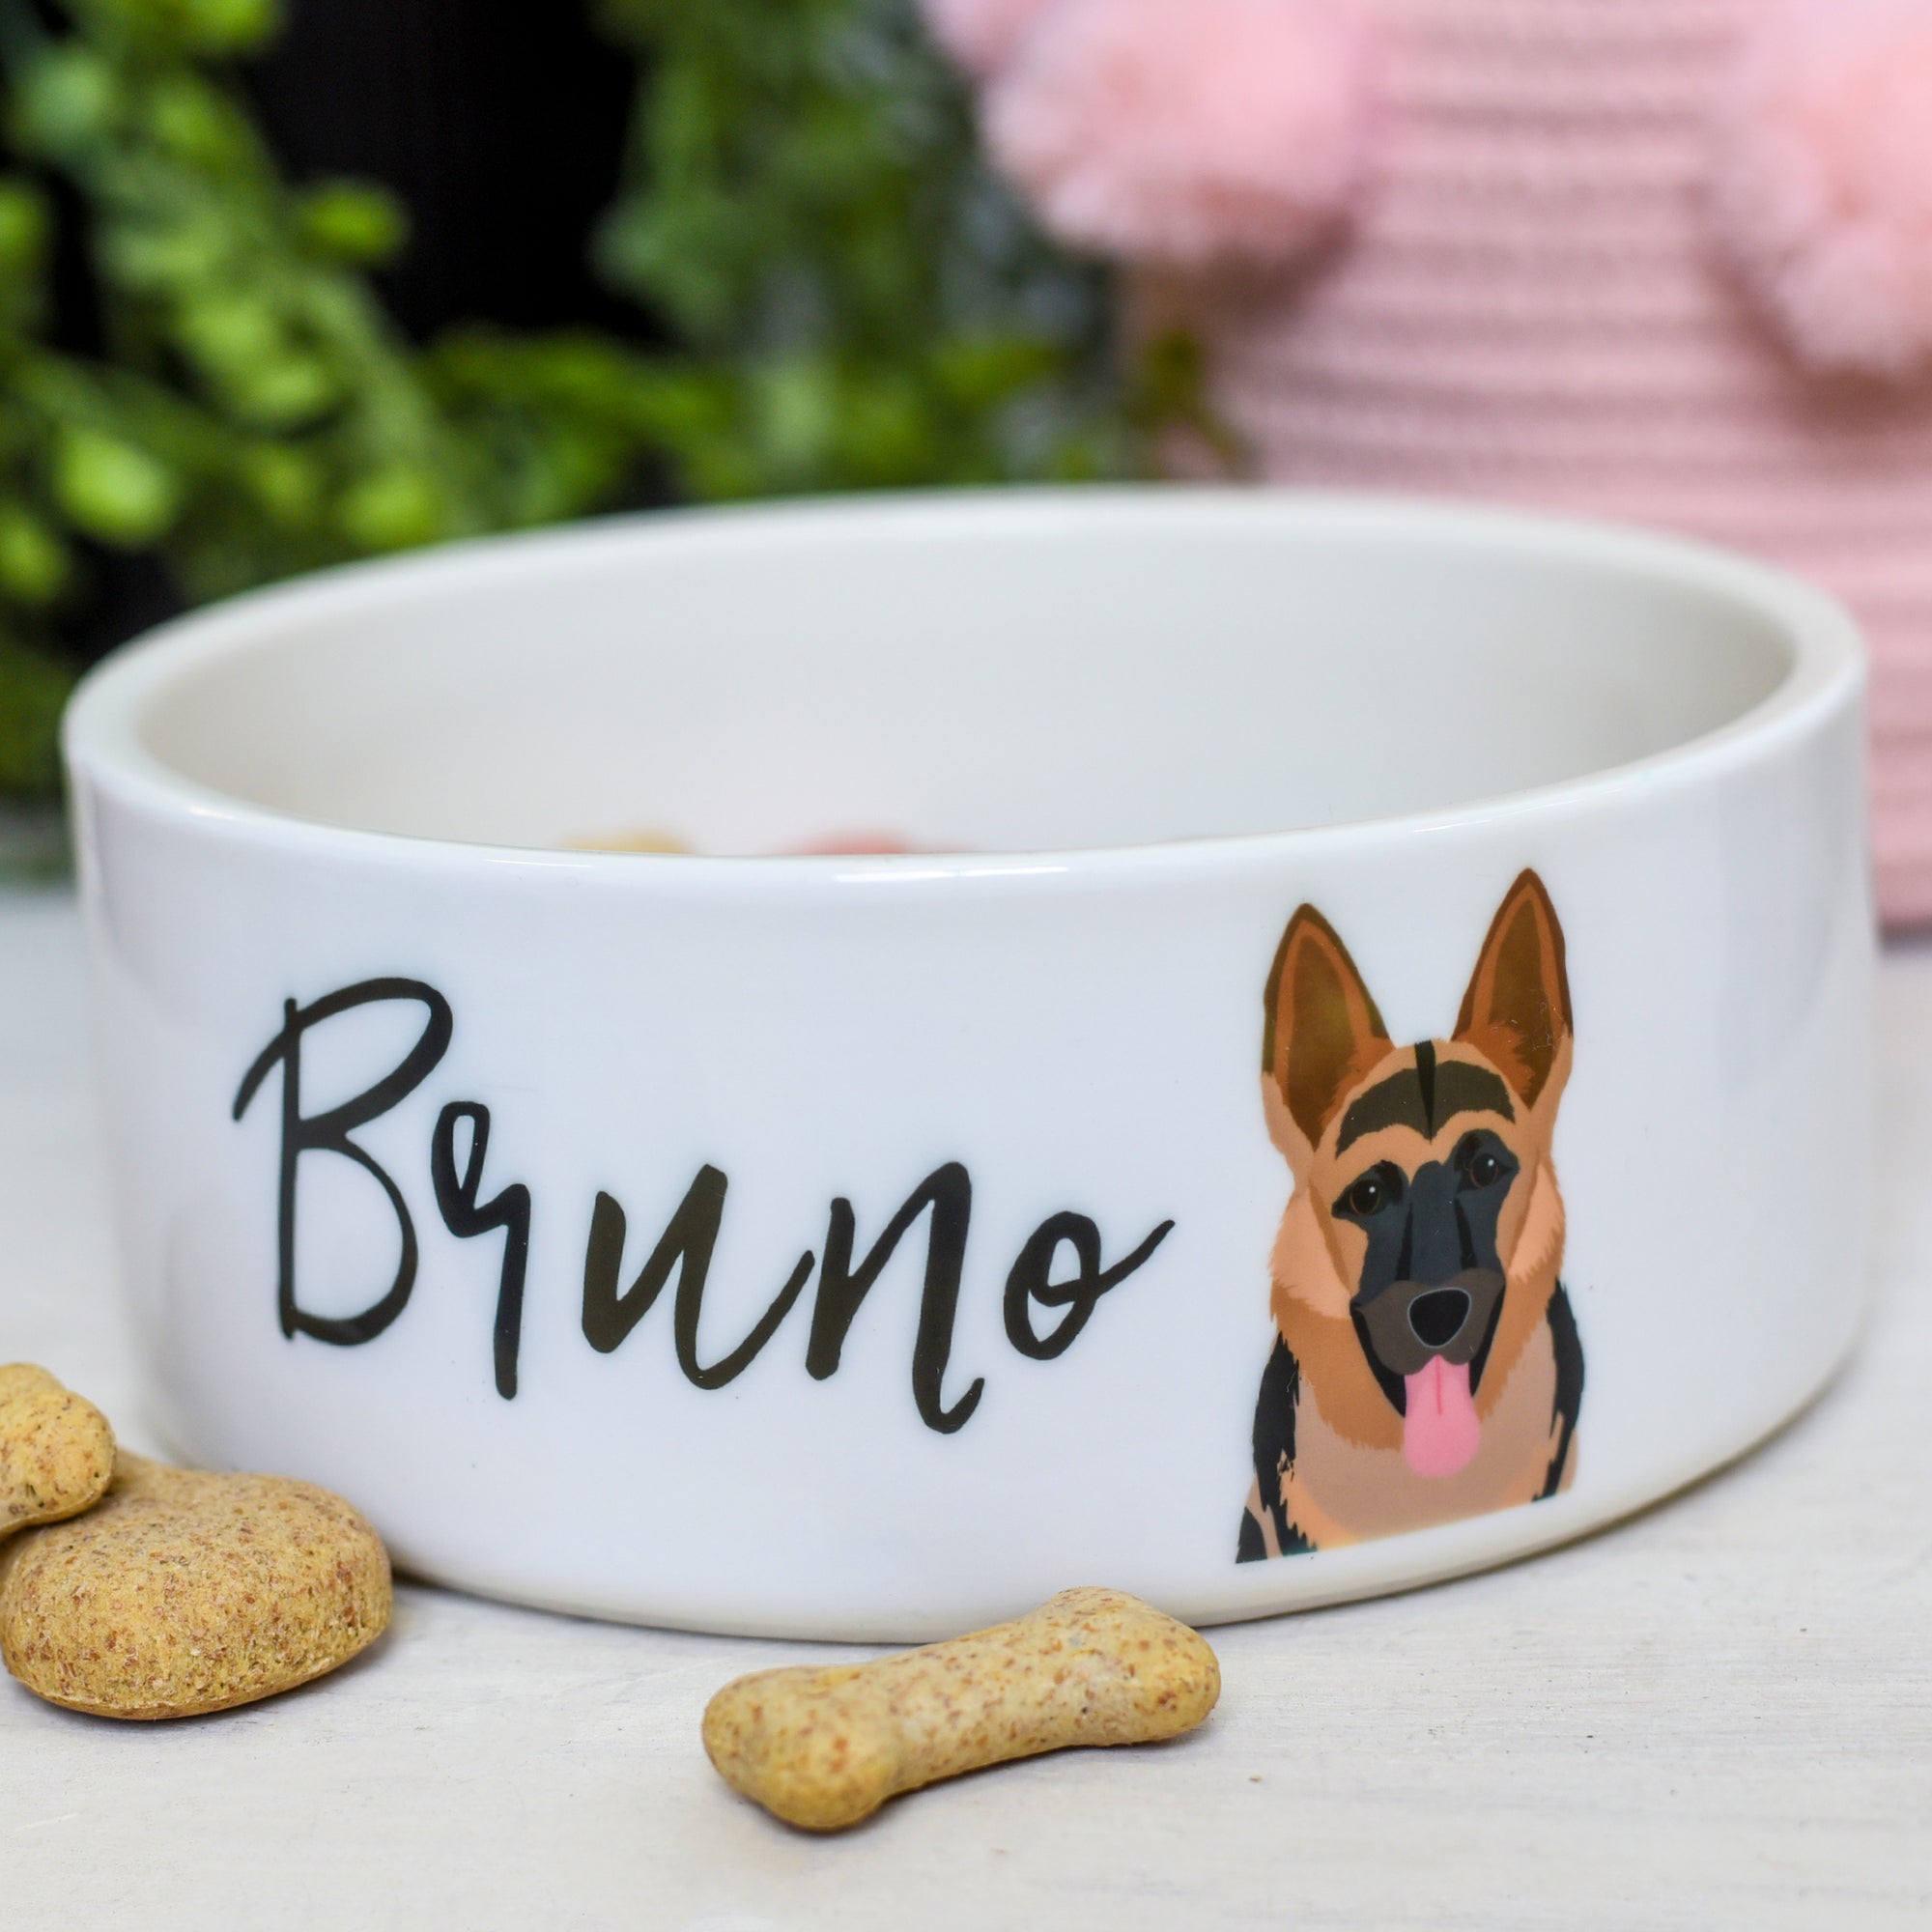 Personalised Ceramic Dog Bowl - Realistic Illustrations